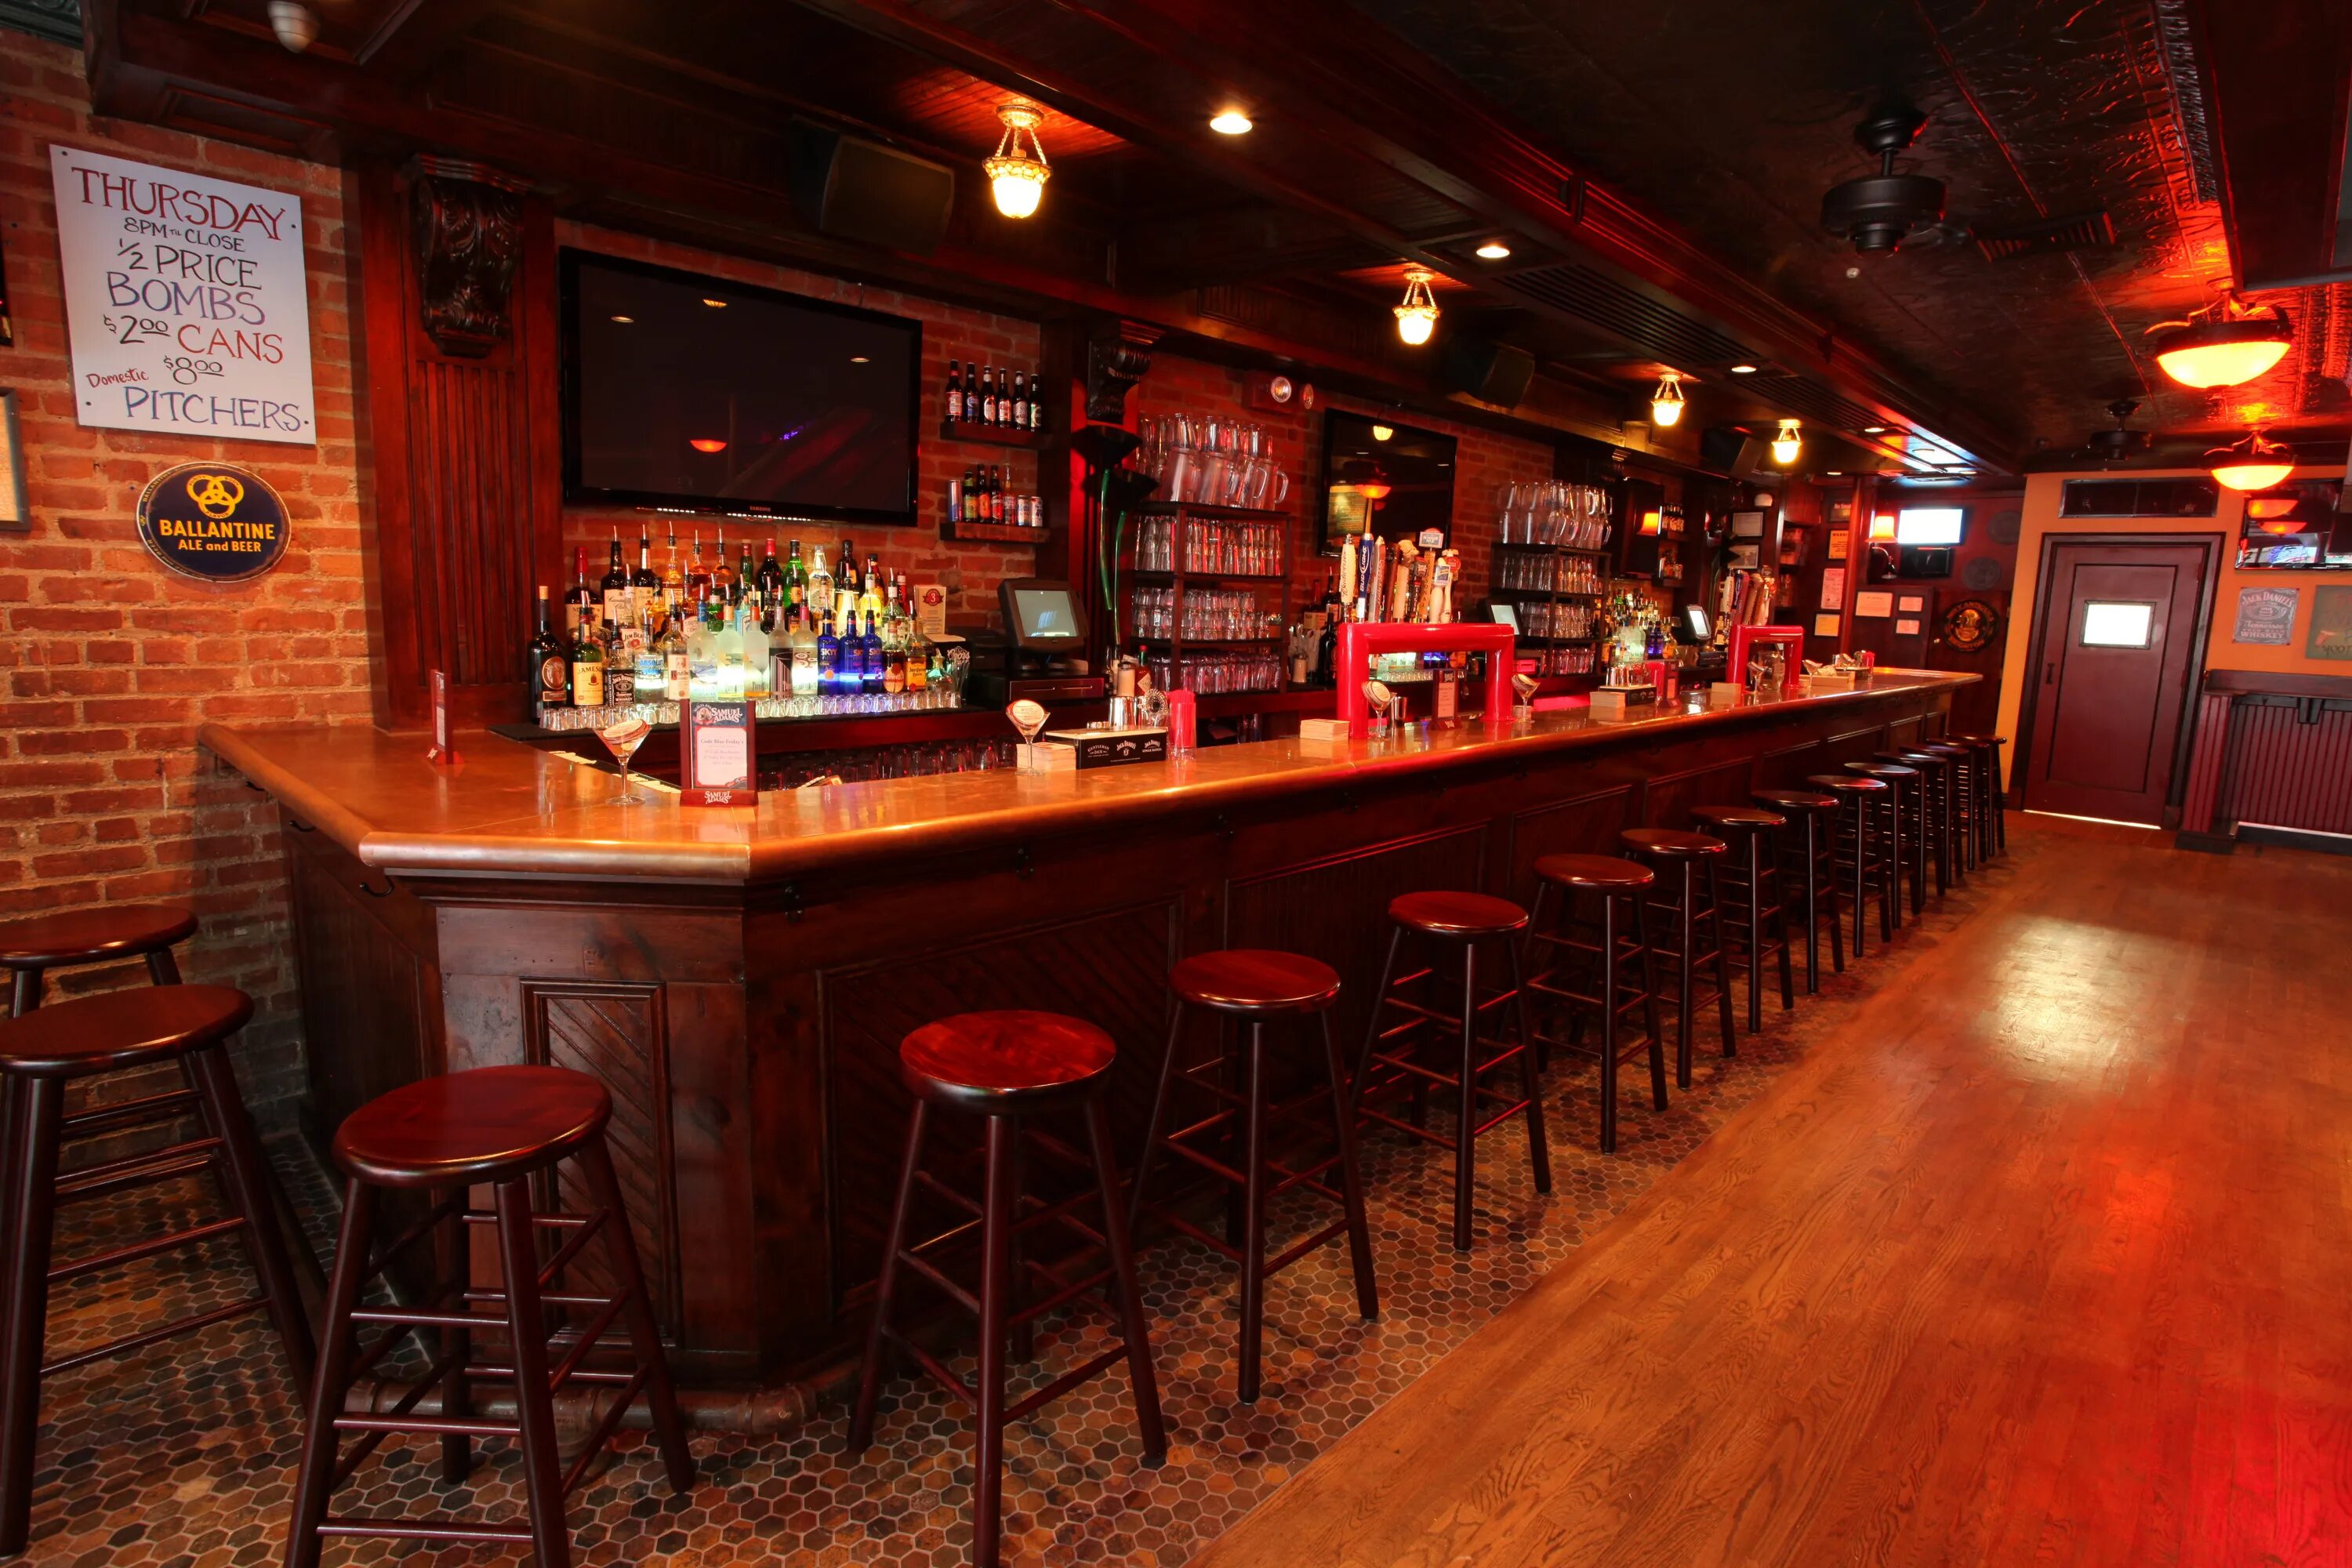 Village bar. Ресторан Салун Нью Йорк. Бар в Нью-Йорке. Ретро бар. Бары в стиле Нью Йорк.